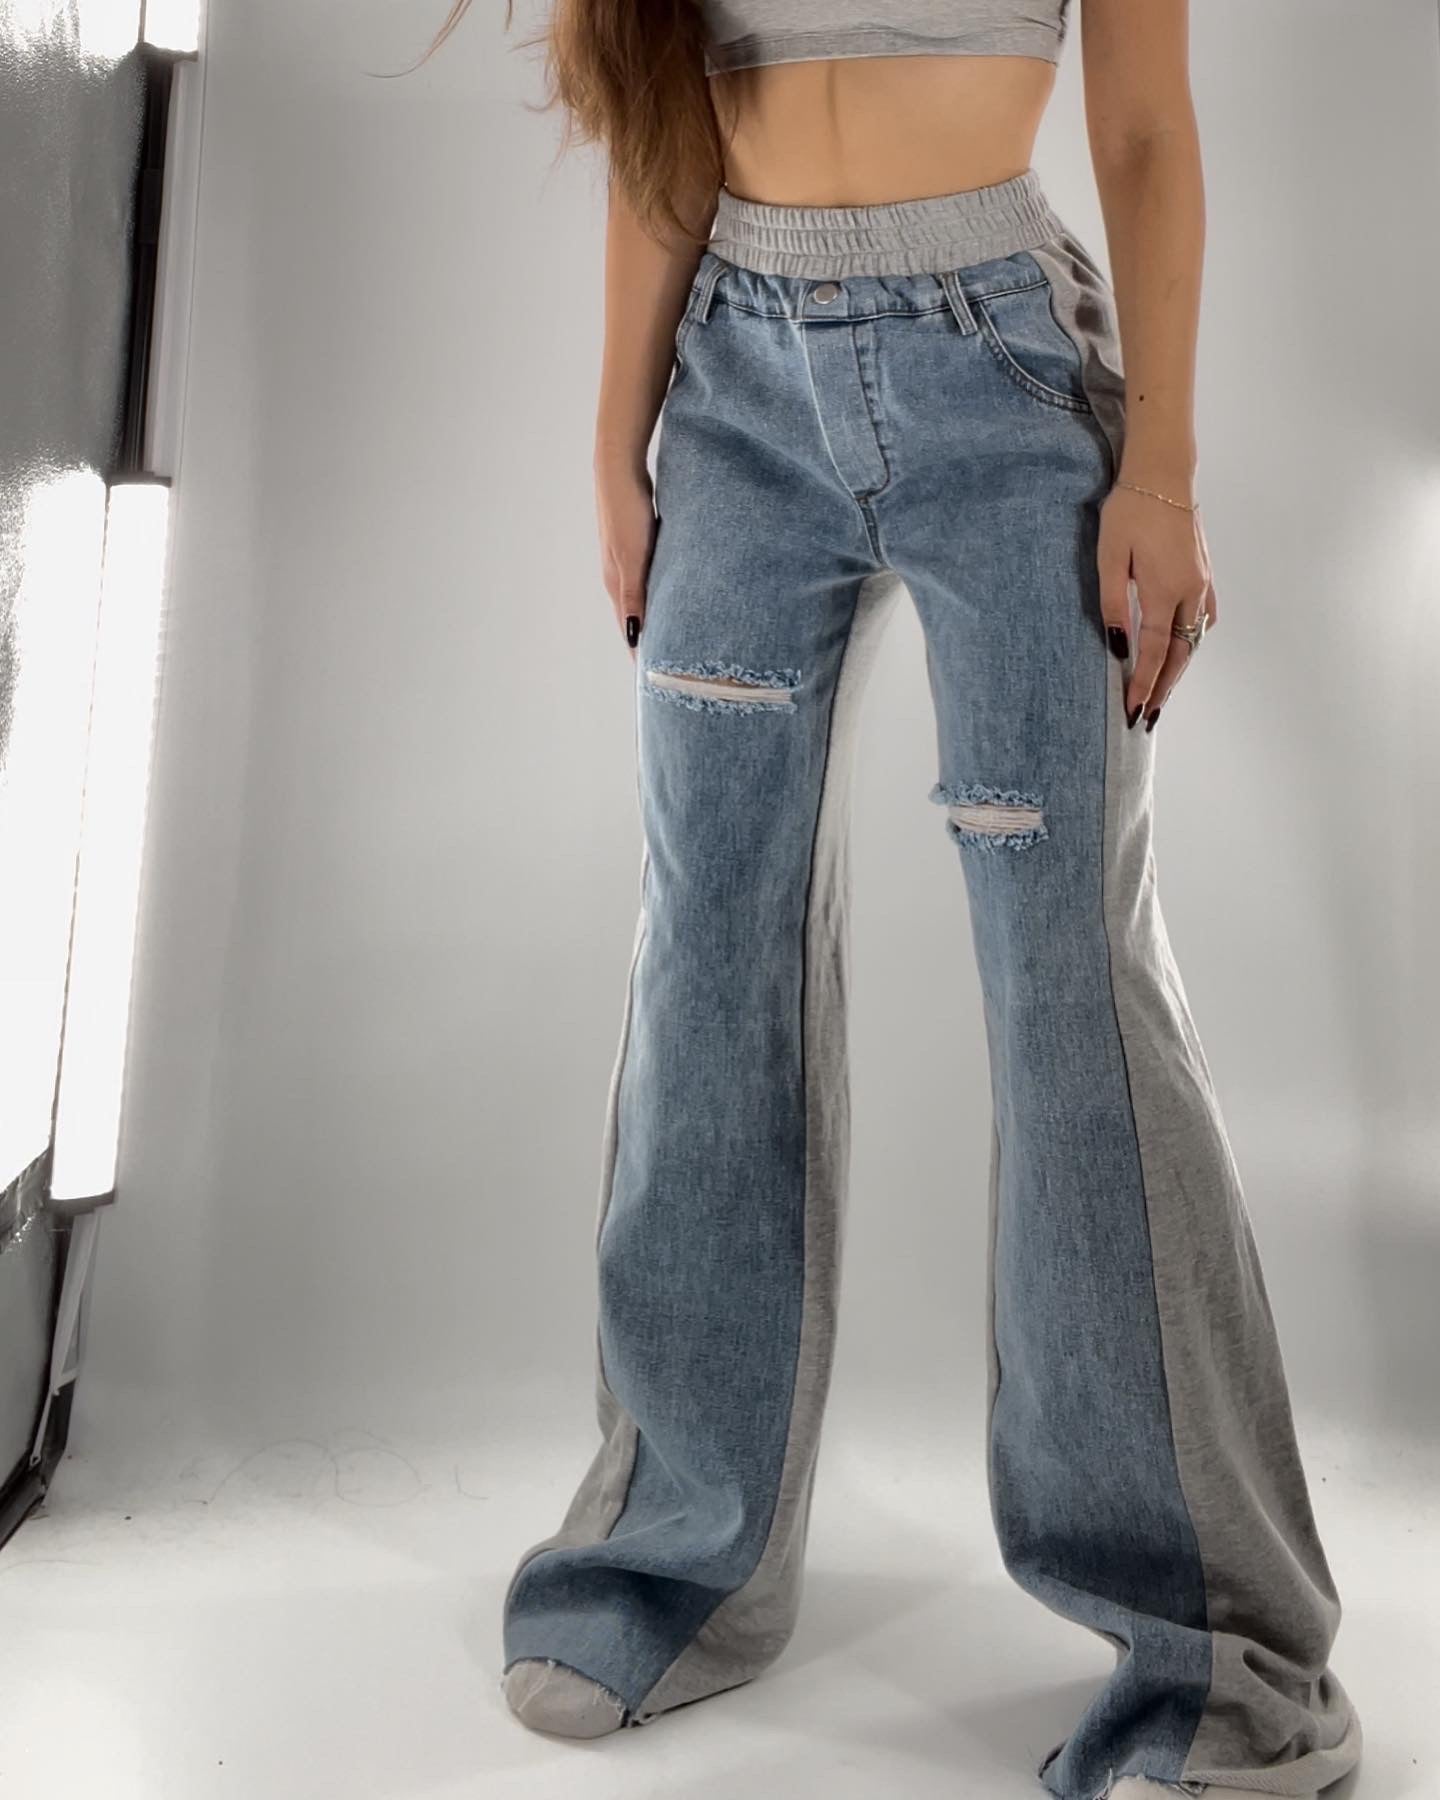 Steve Madden Redone Jeans/Sweats (Small)